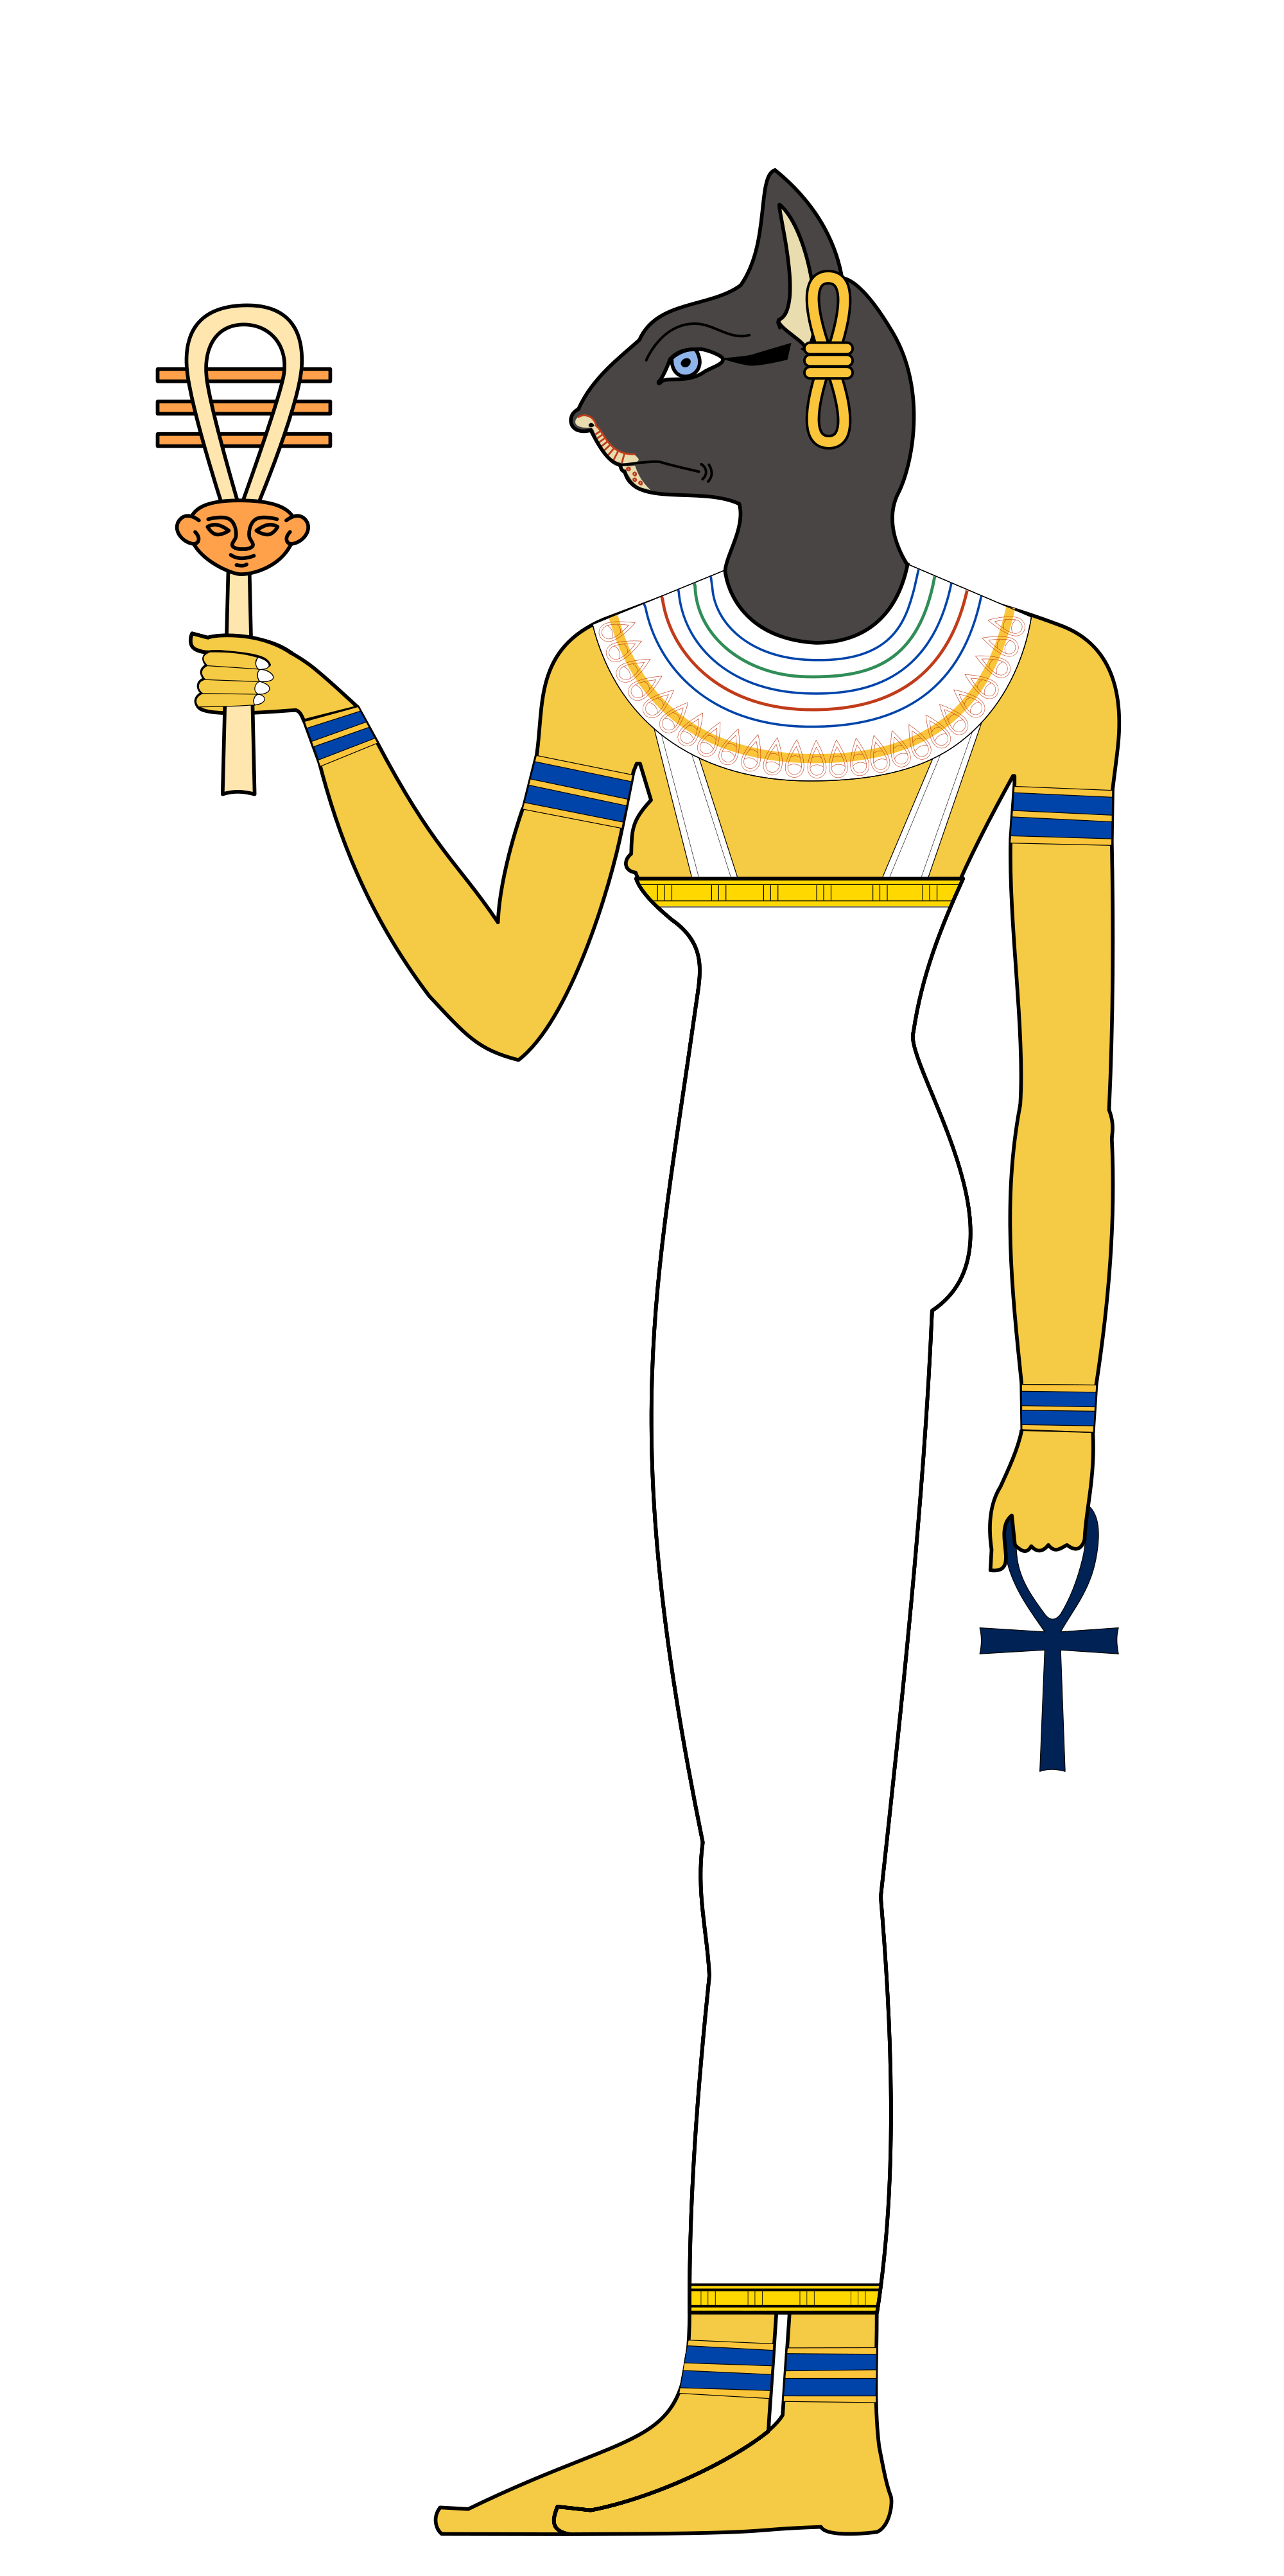 Бог баст. Бастет богиня. Бог кошки в древнем Египте Бастет. Богиня Баст в древнем Египте. Боги древнего Египта богиня Бастет.